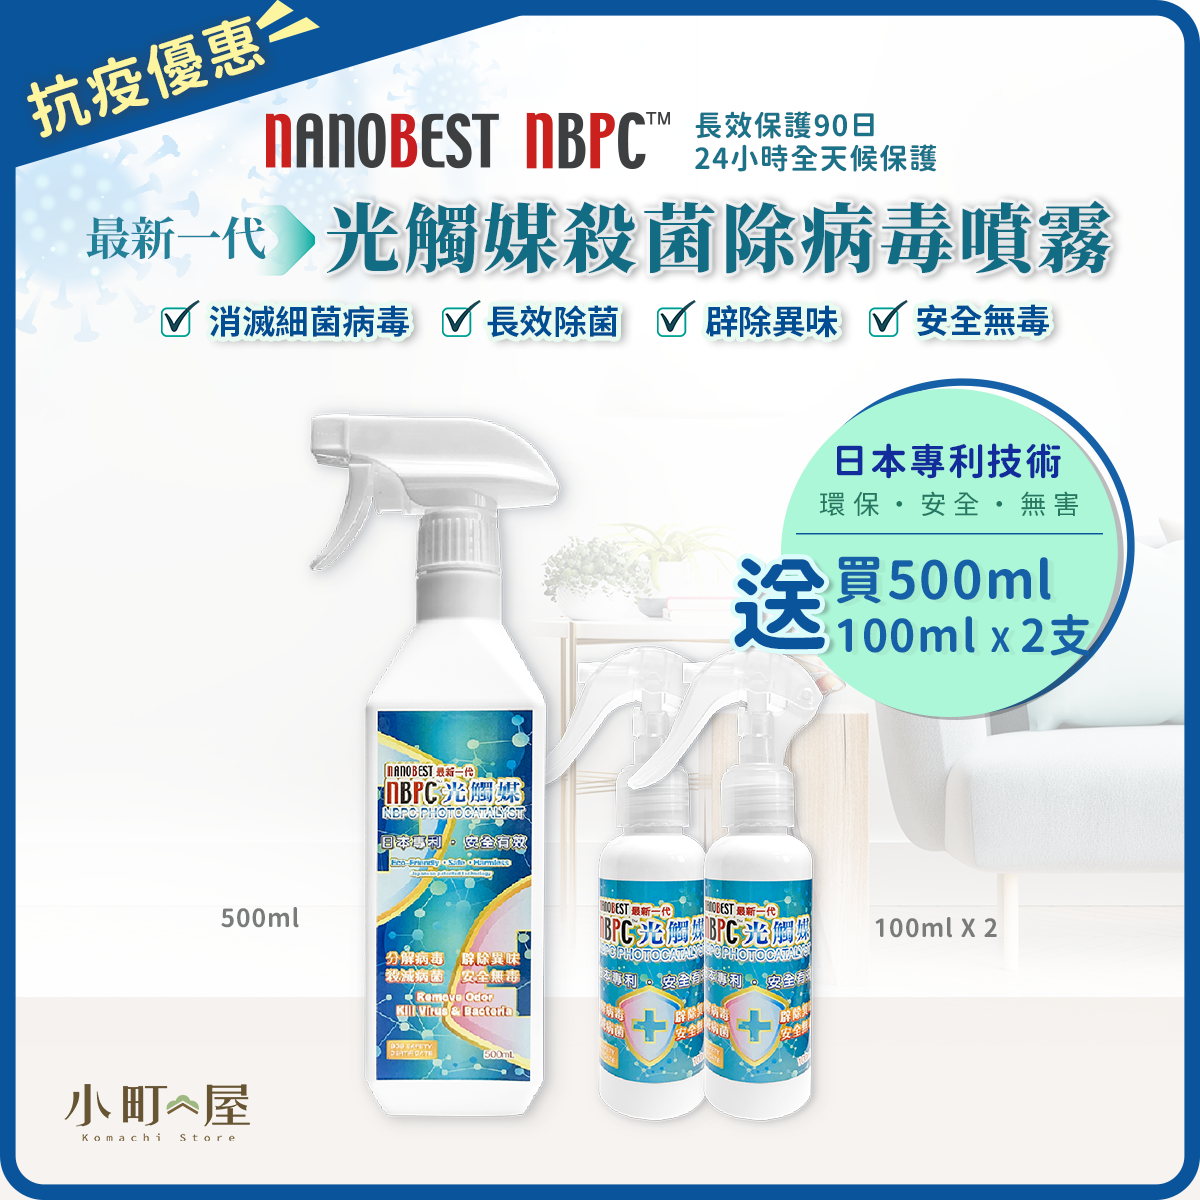 Japan Patented Technology | Latest Generation Light |Catalyst Sanitizing Spray 500ml GIFT100ml X 2